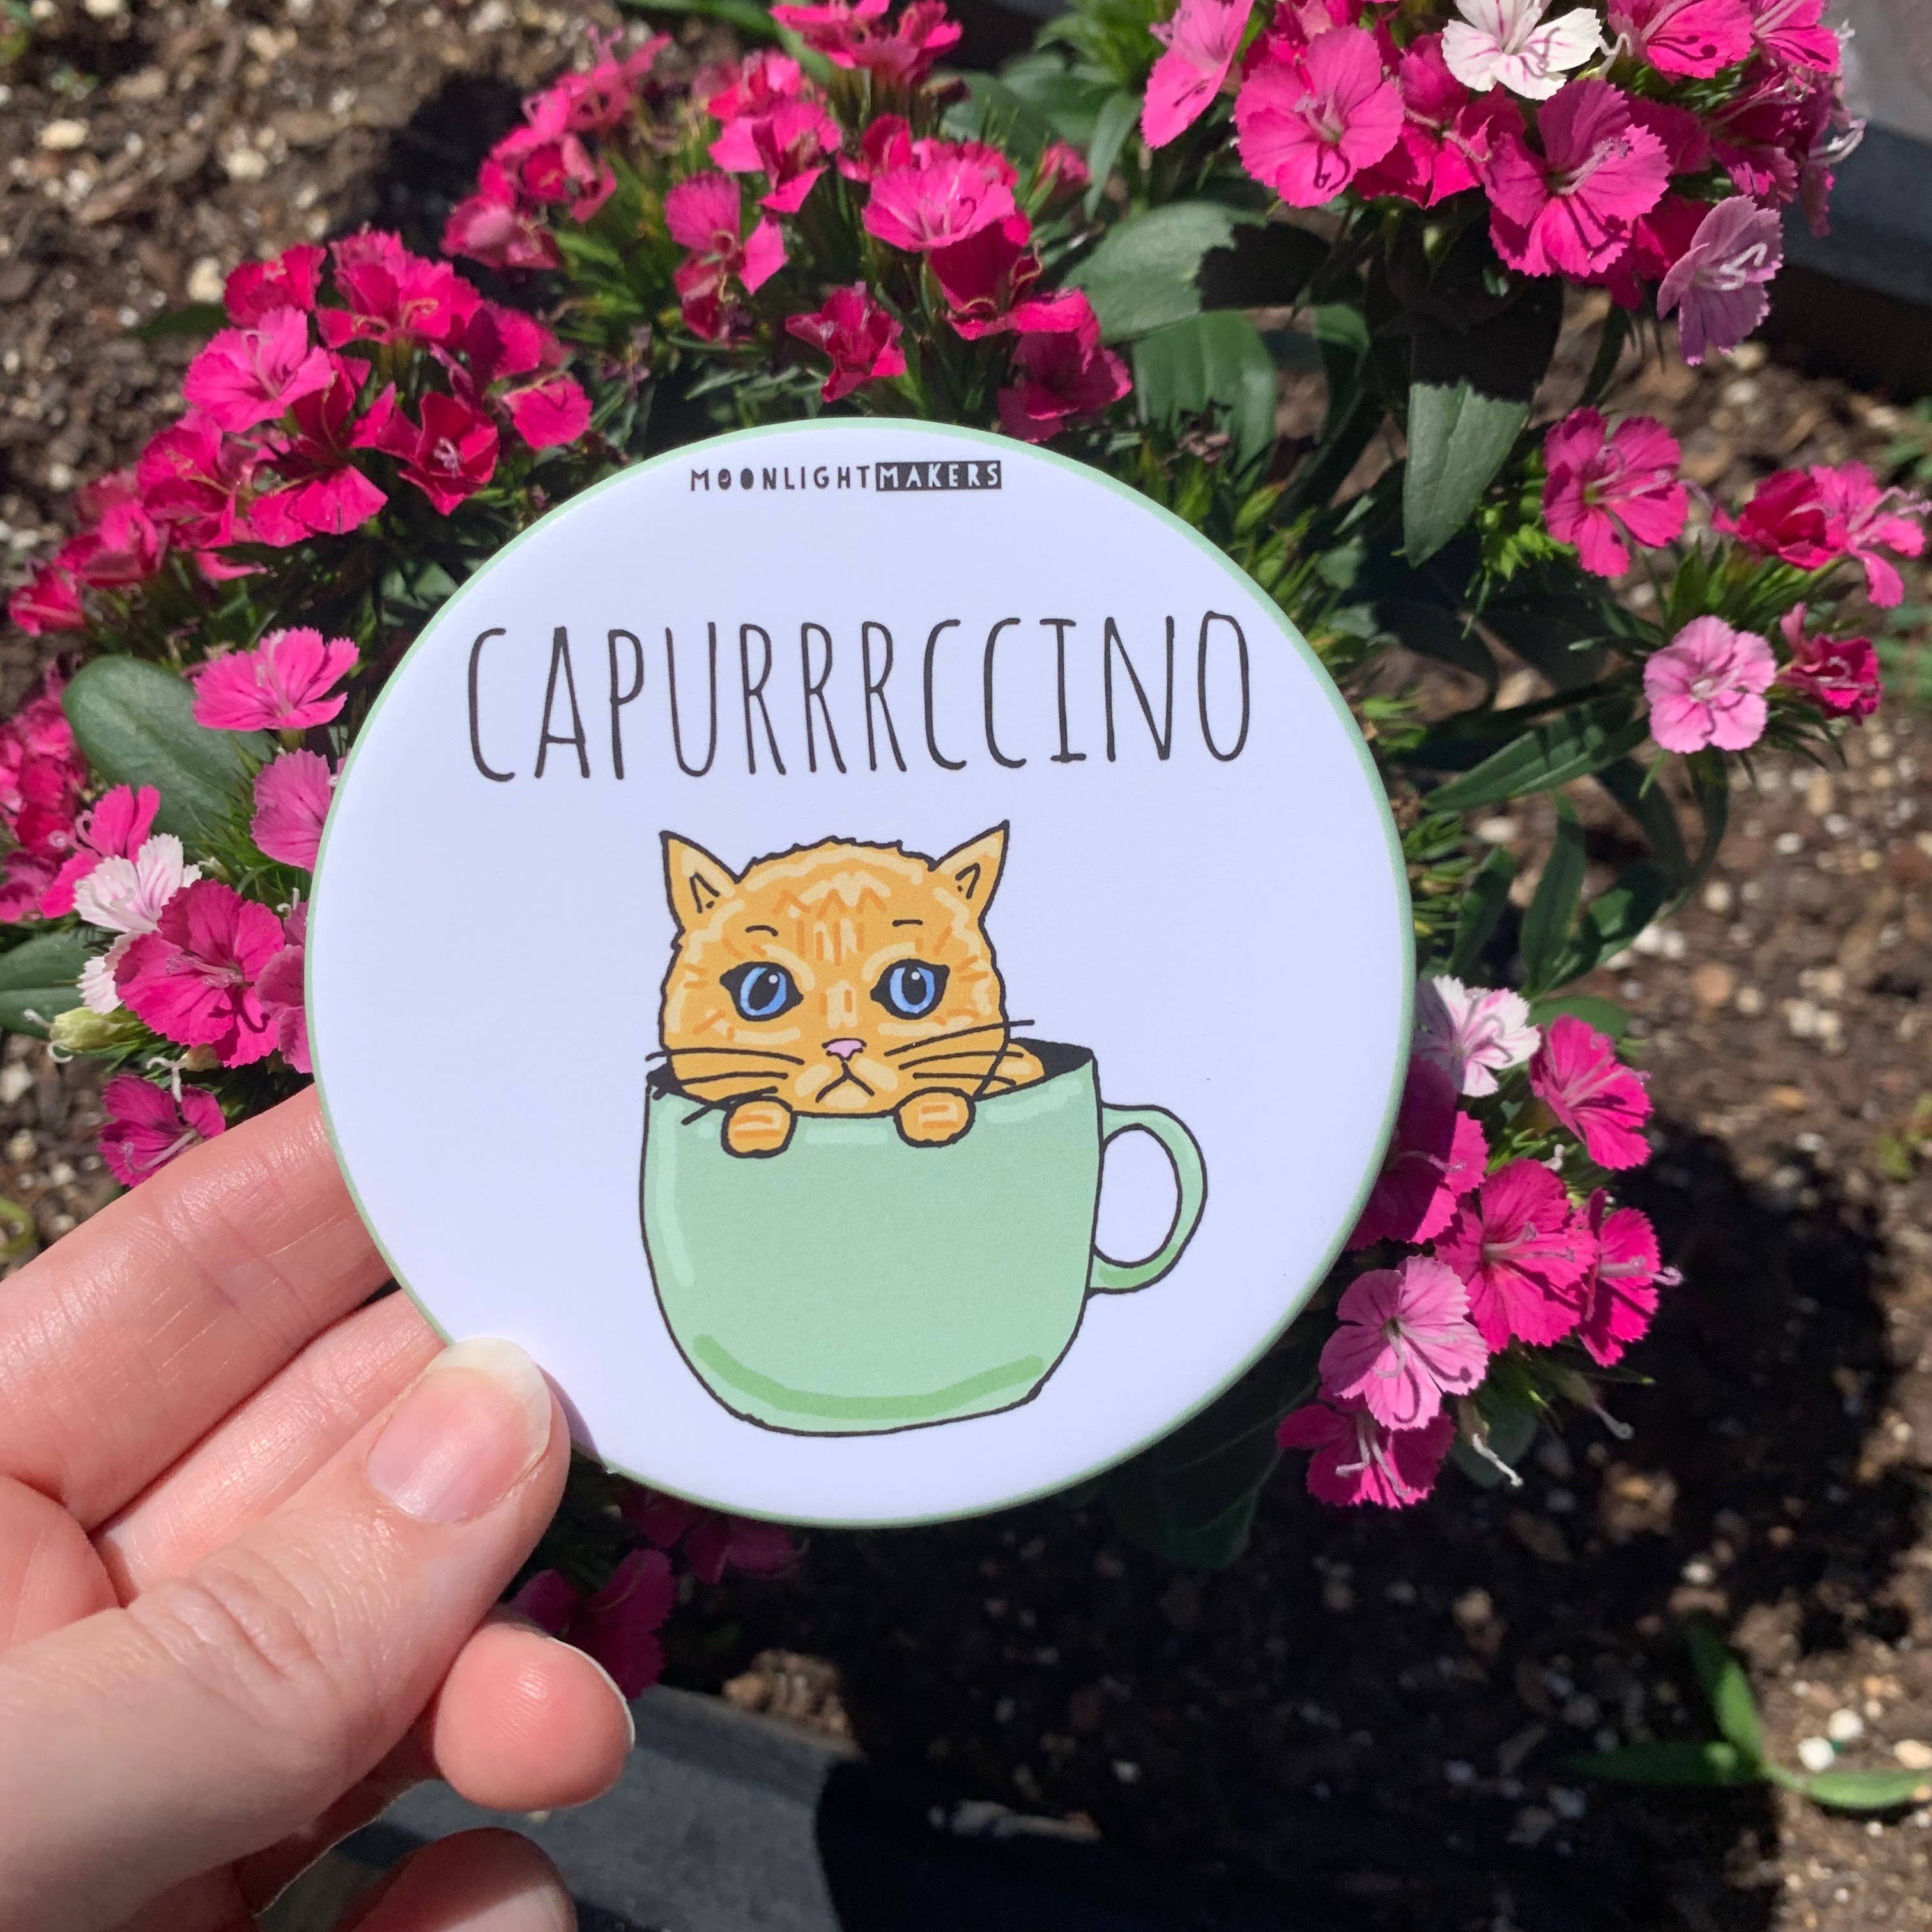 Capurrrccino Coasters